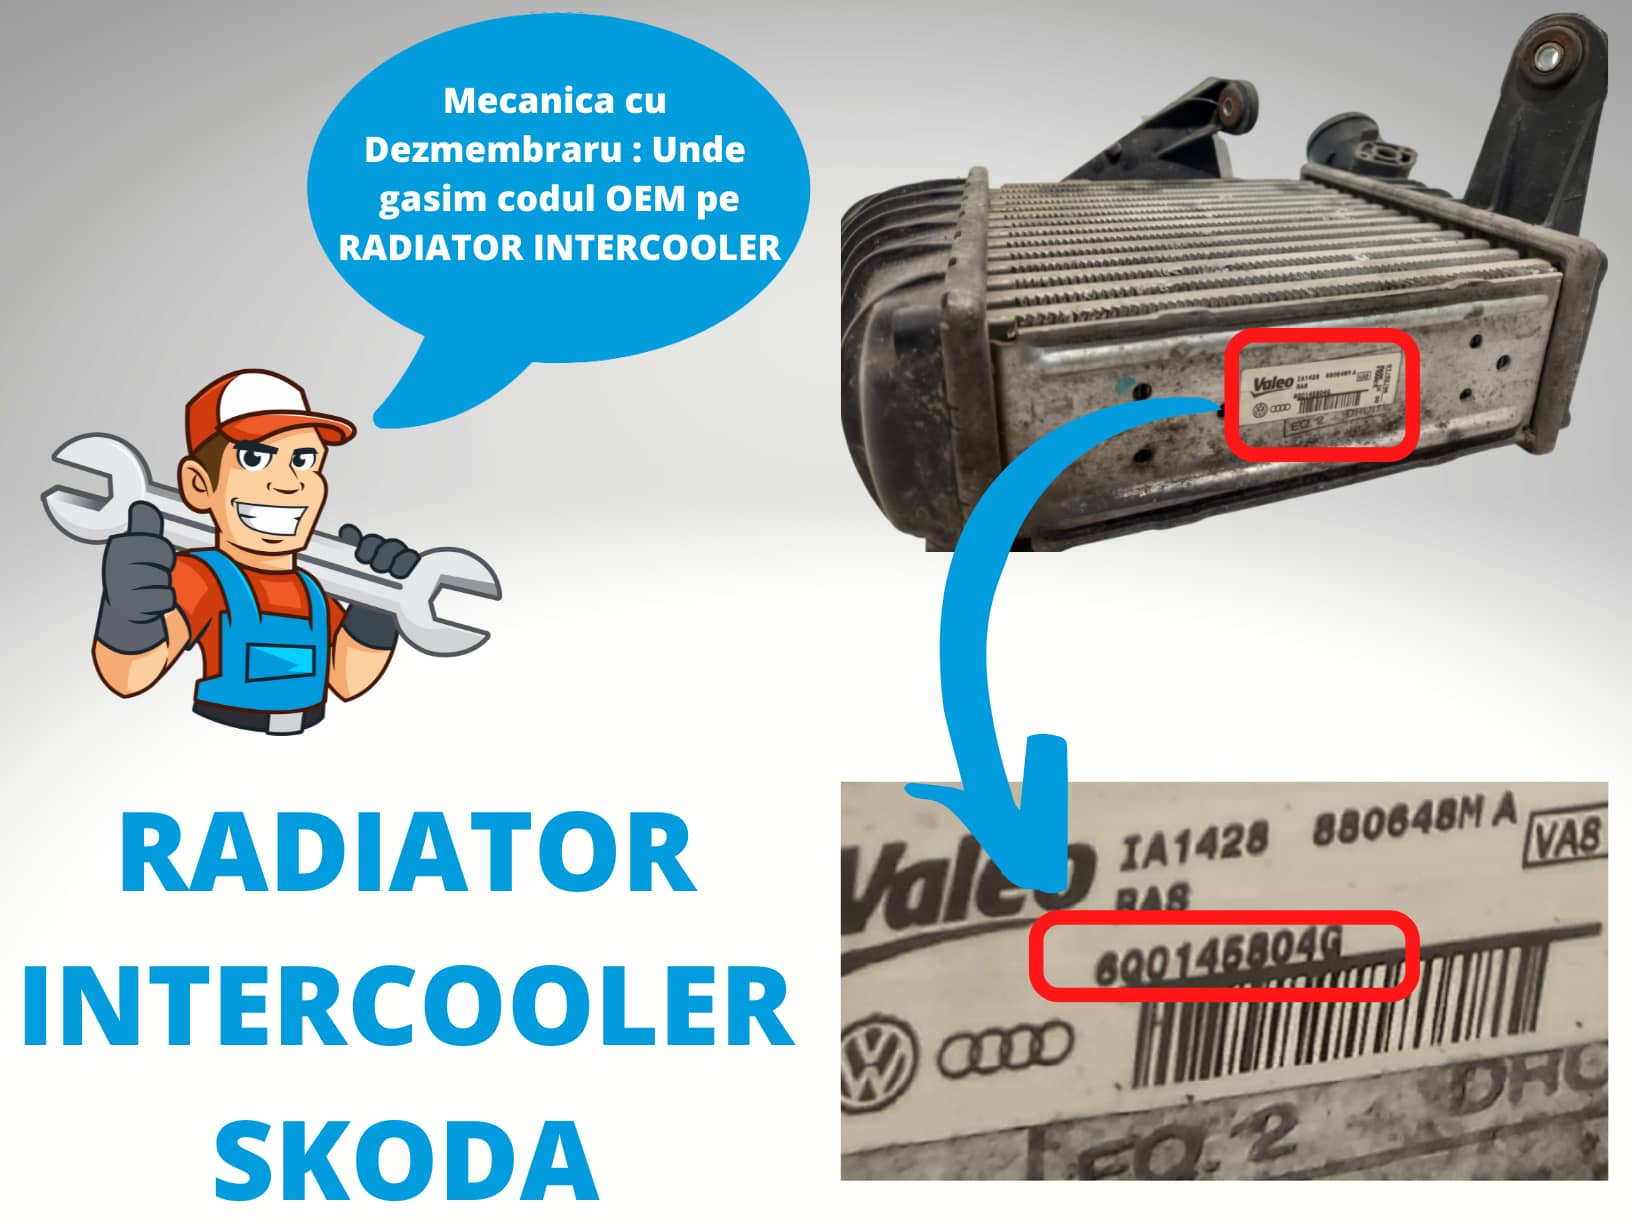 Radiator Intercooler Skoda